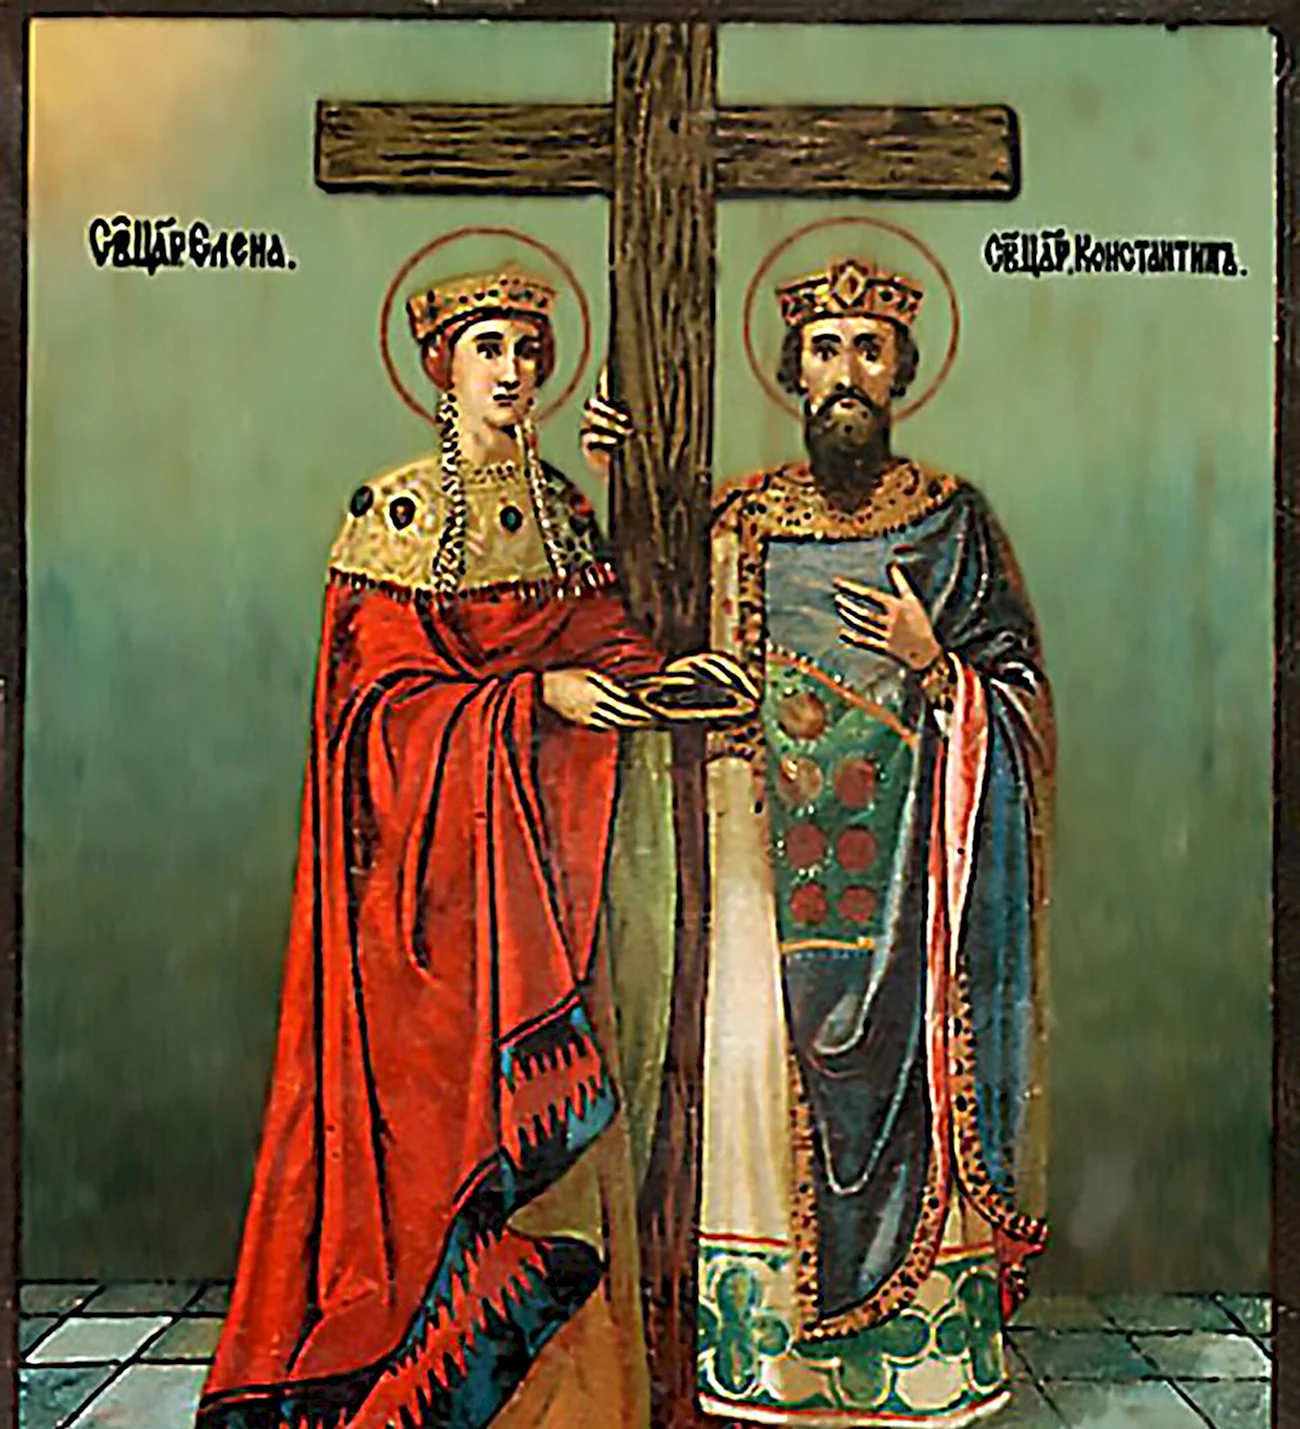 Равноапп. Царь Константин 337 и царица Елена 327. Поздравление